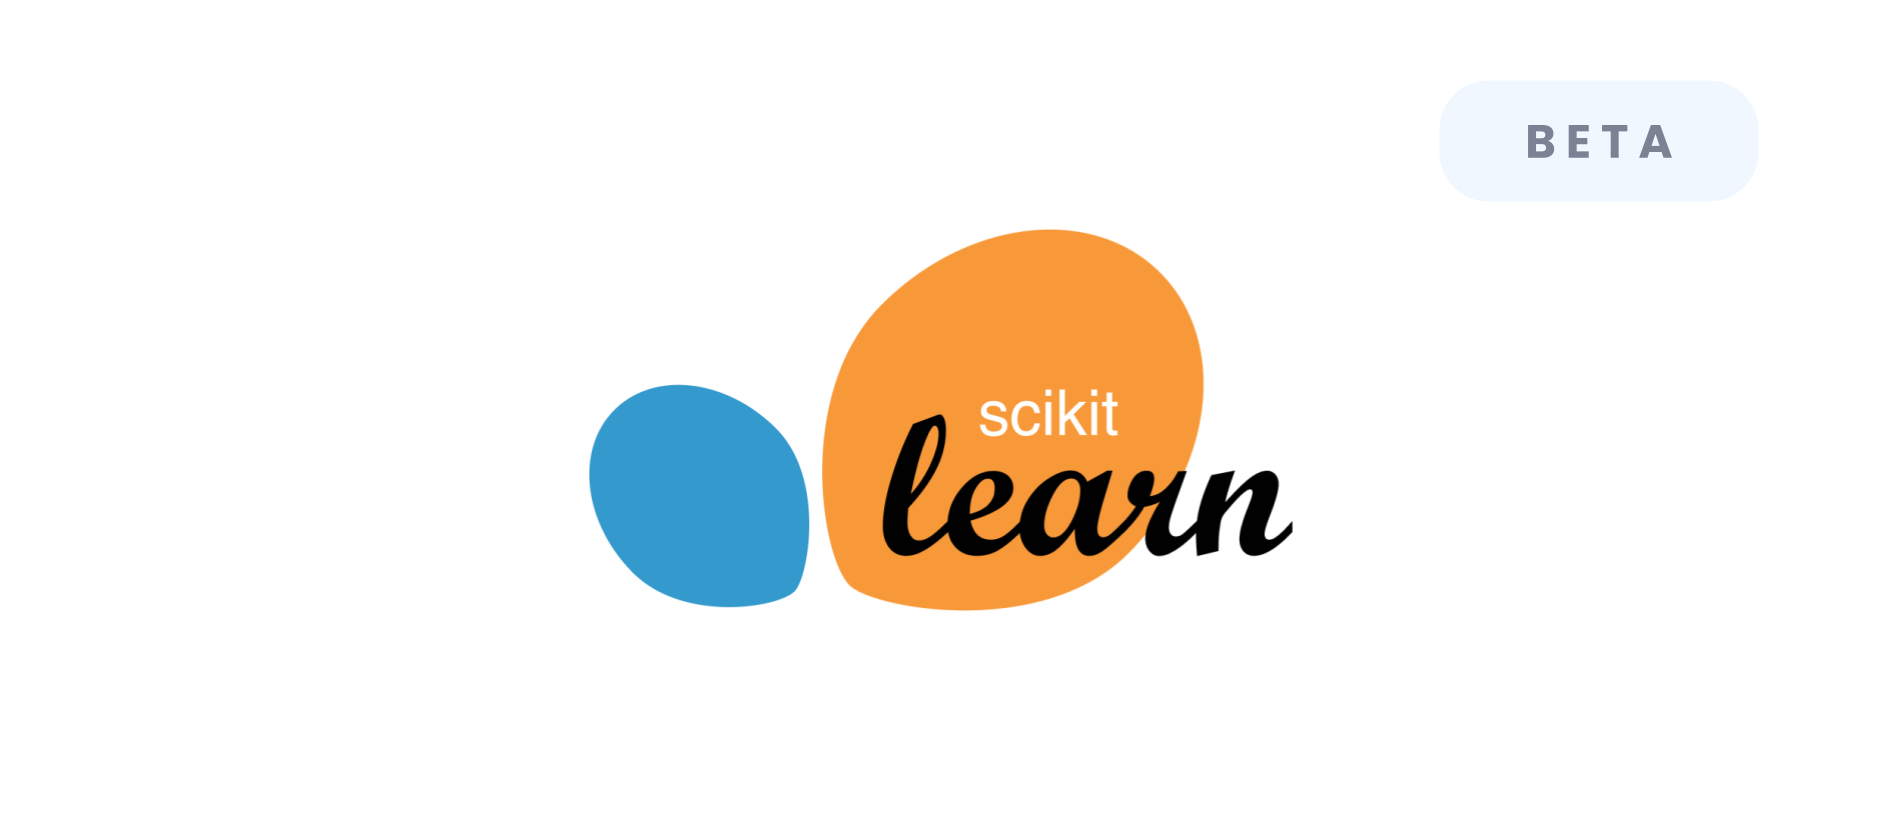 Machine Learning - scikit learn - Beta